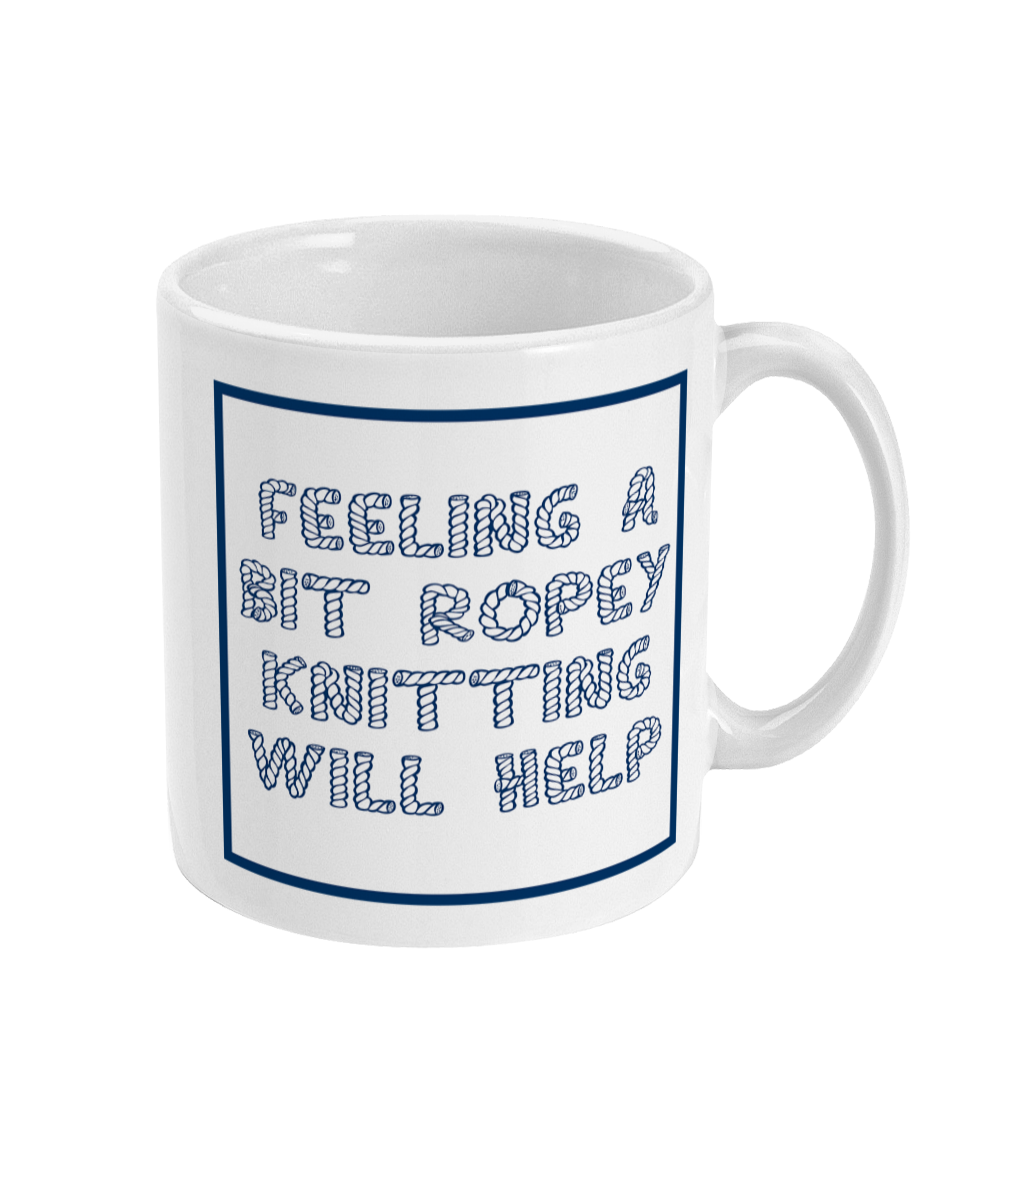 mug with feeling a bit ropey knitting will help